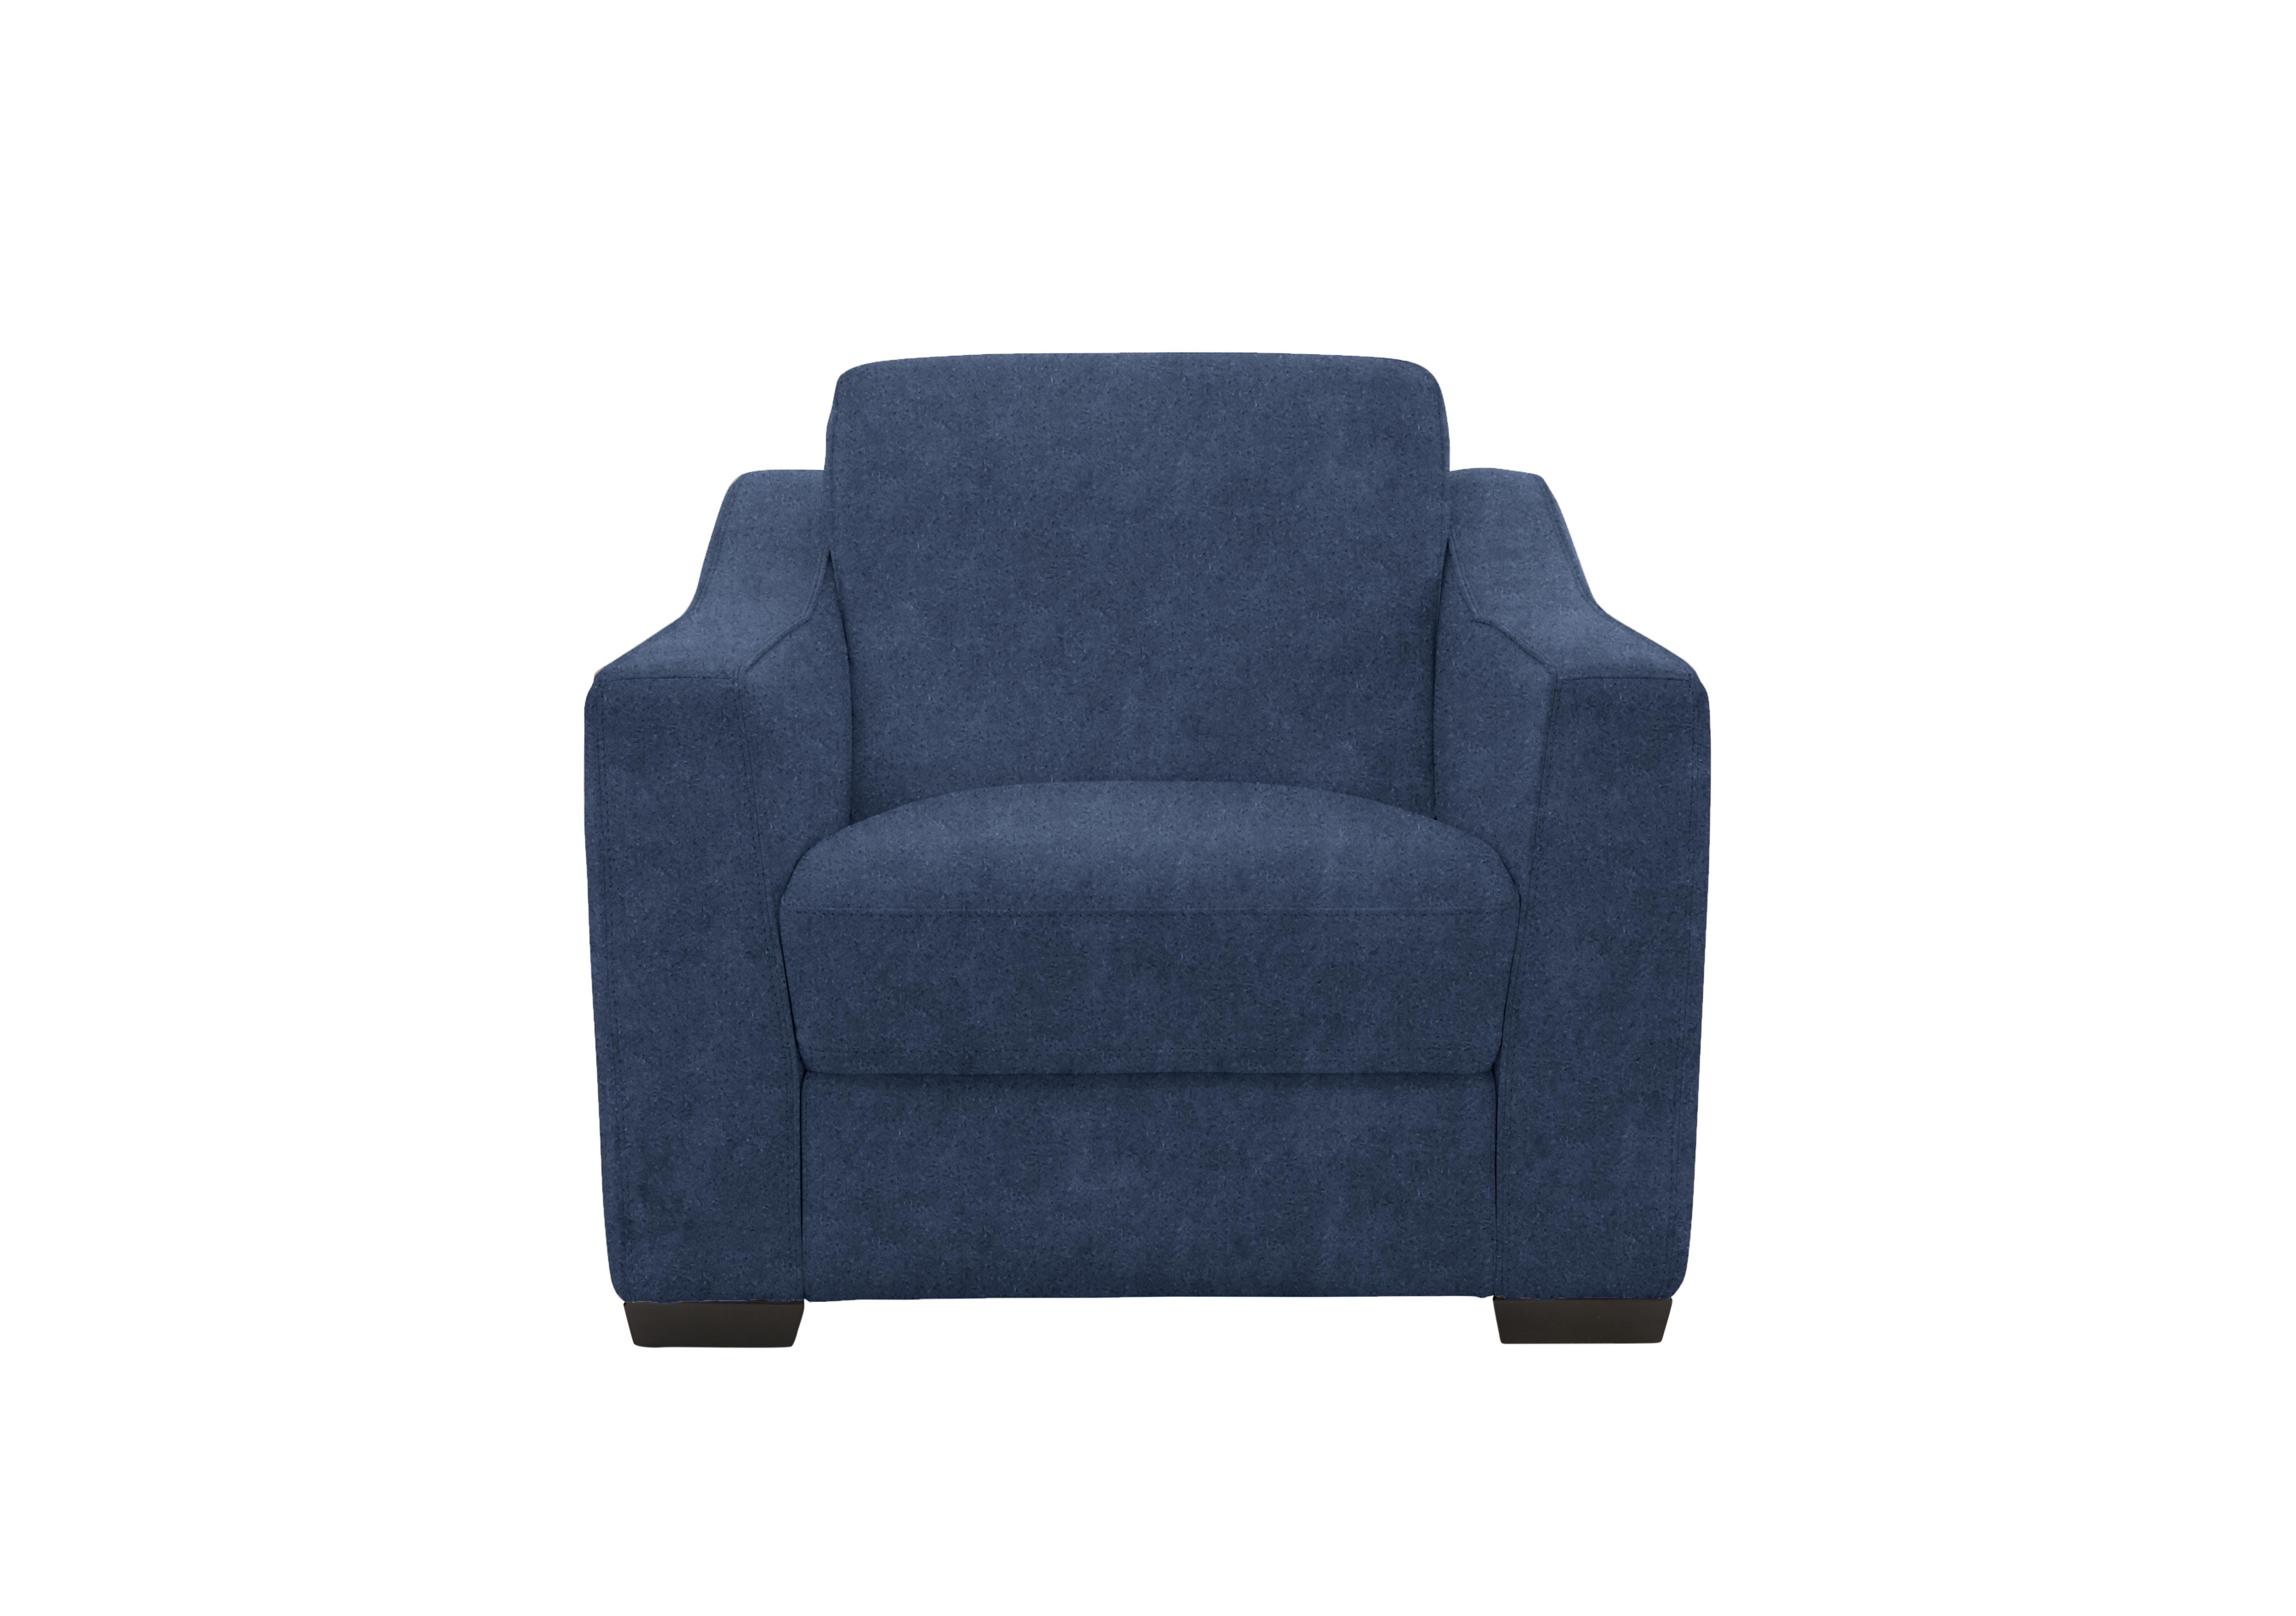 Optimus Fabric Armchair in Bfa-Blj-R10 Blue on Furniture Village